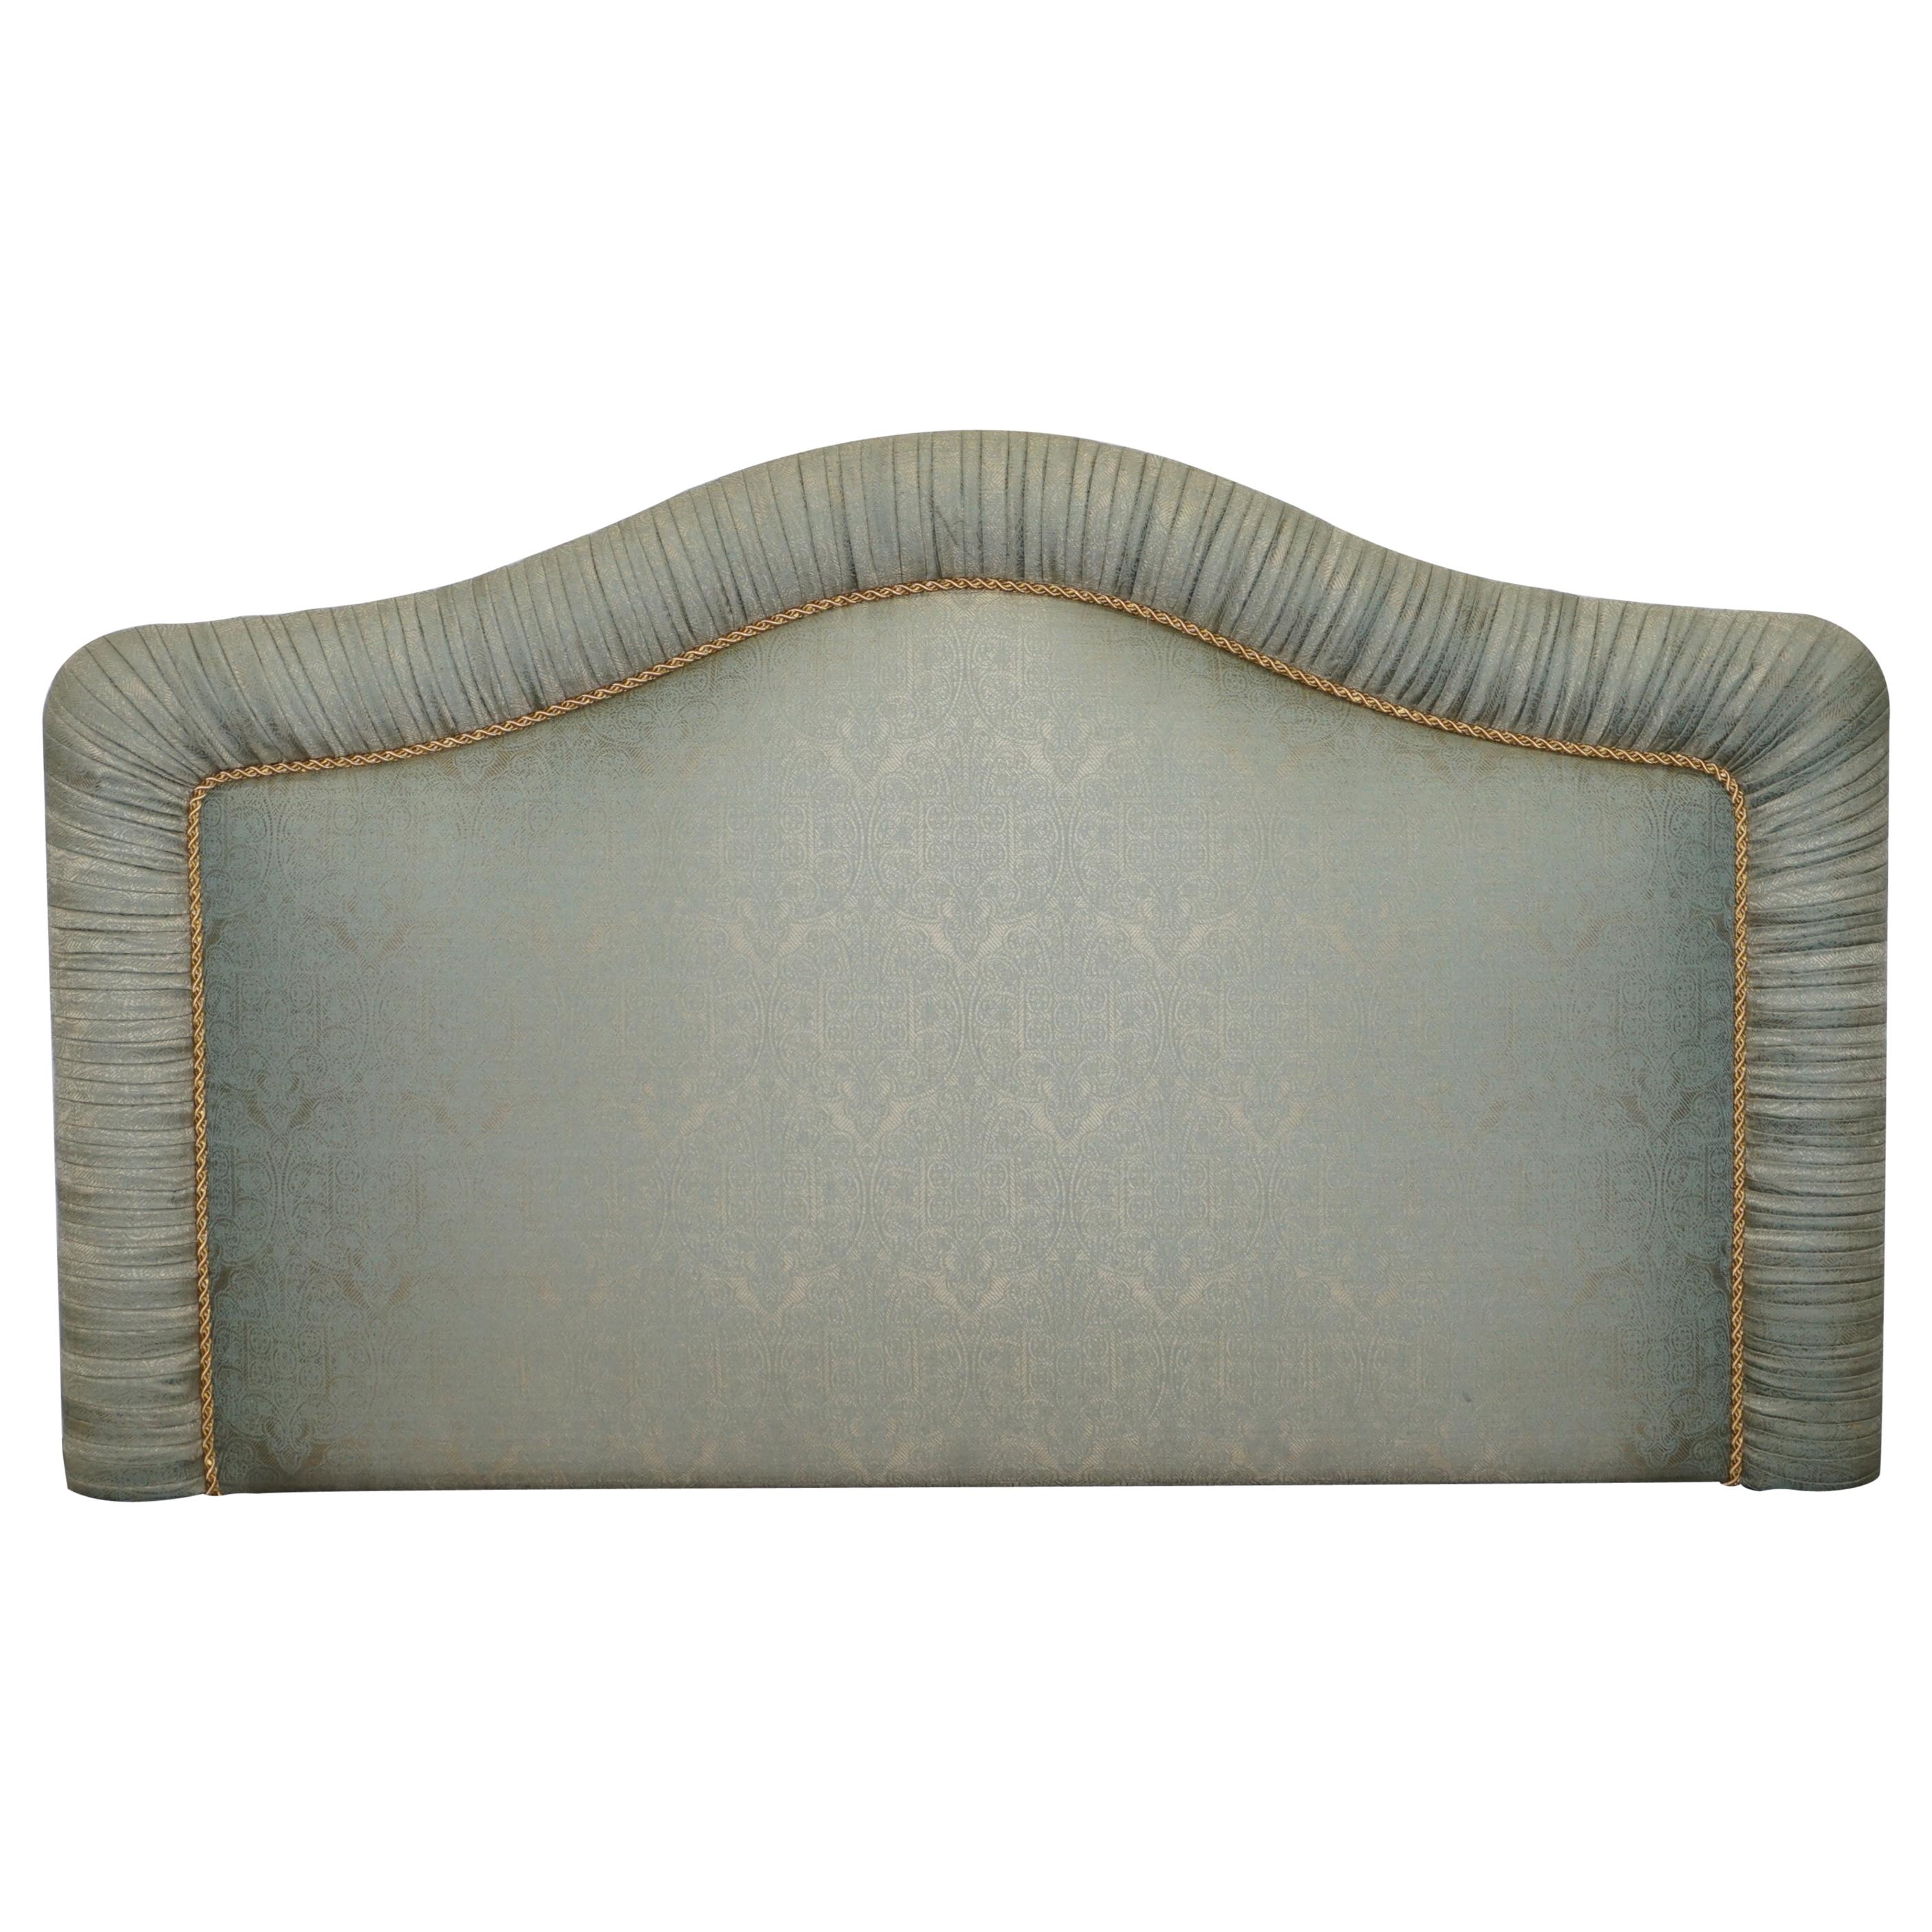 Harrods London Silk Upholstered Padded King Size Headboard Paisley Upholstery